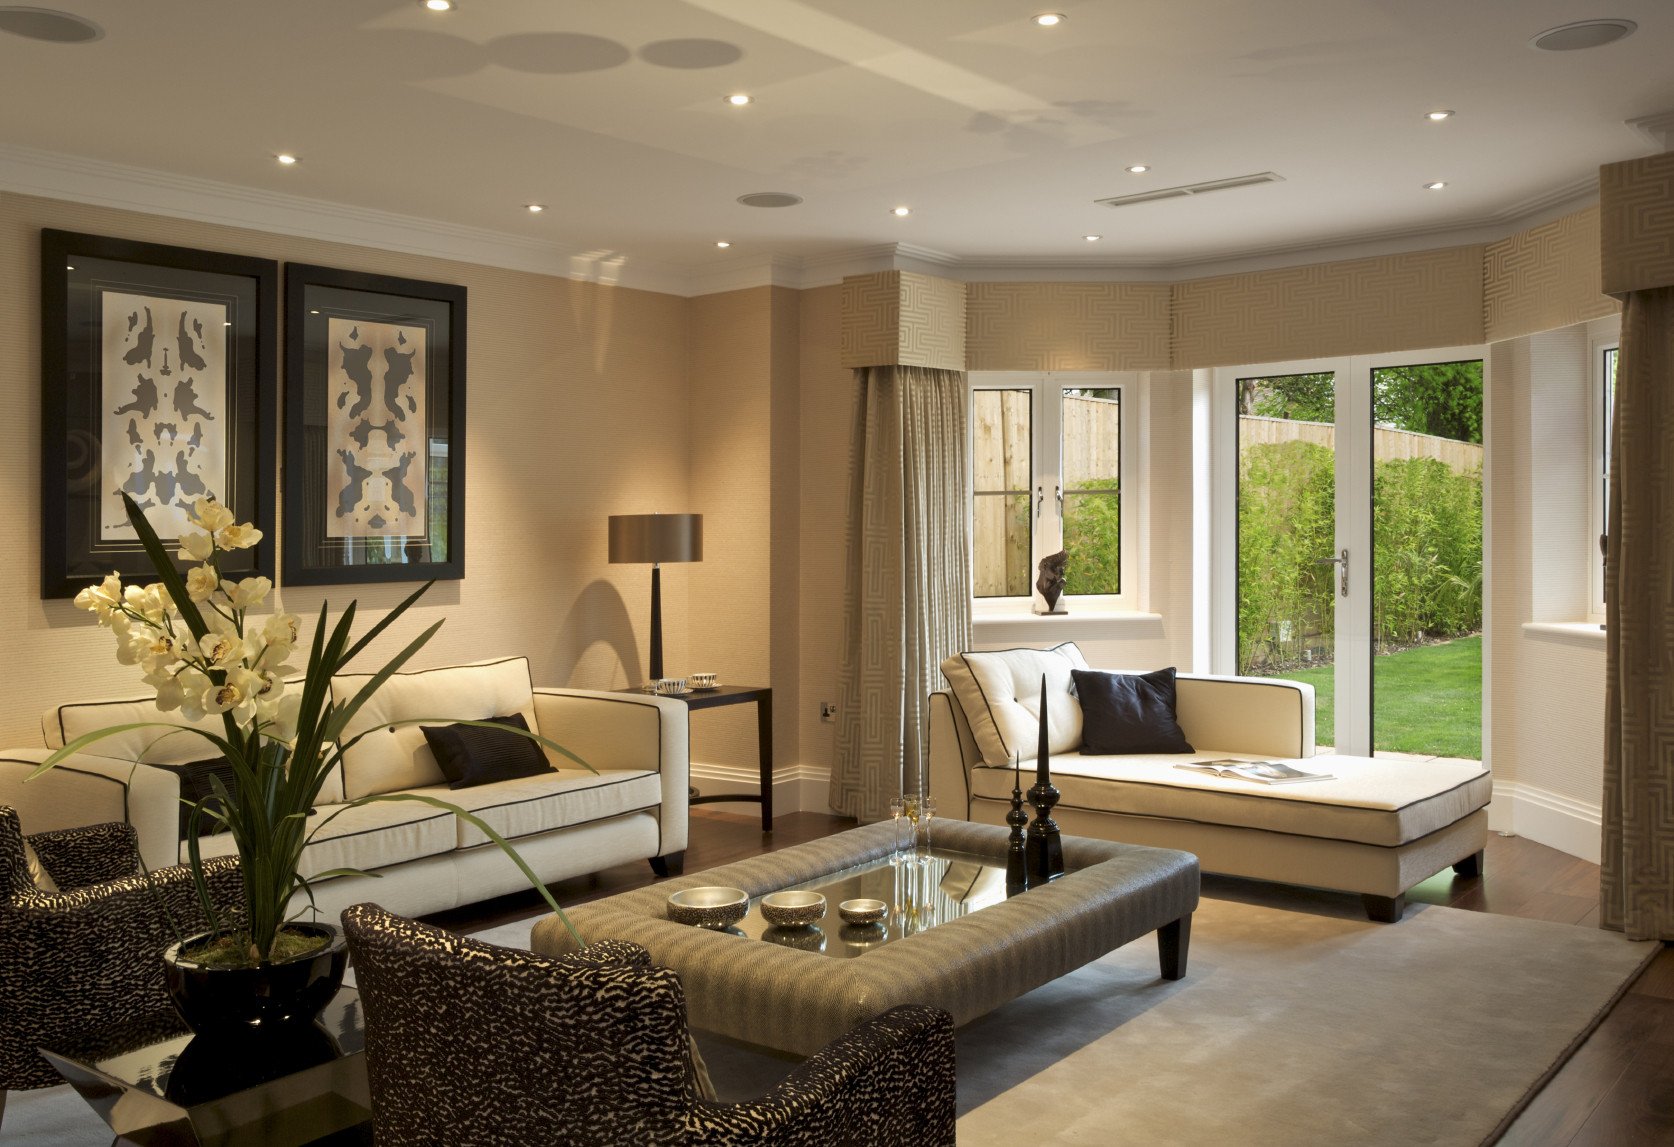 Comfortable Modern Living Room Make the Living Room Design Be E More fortable